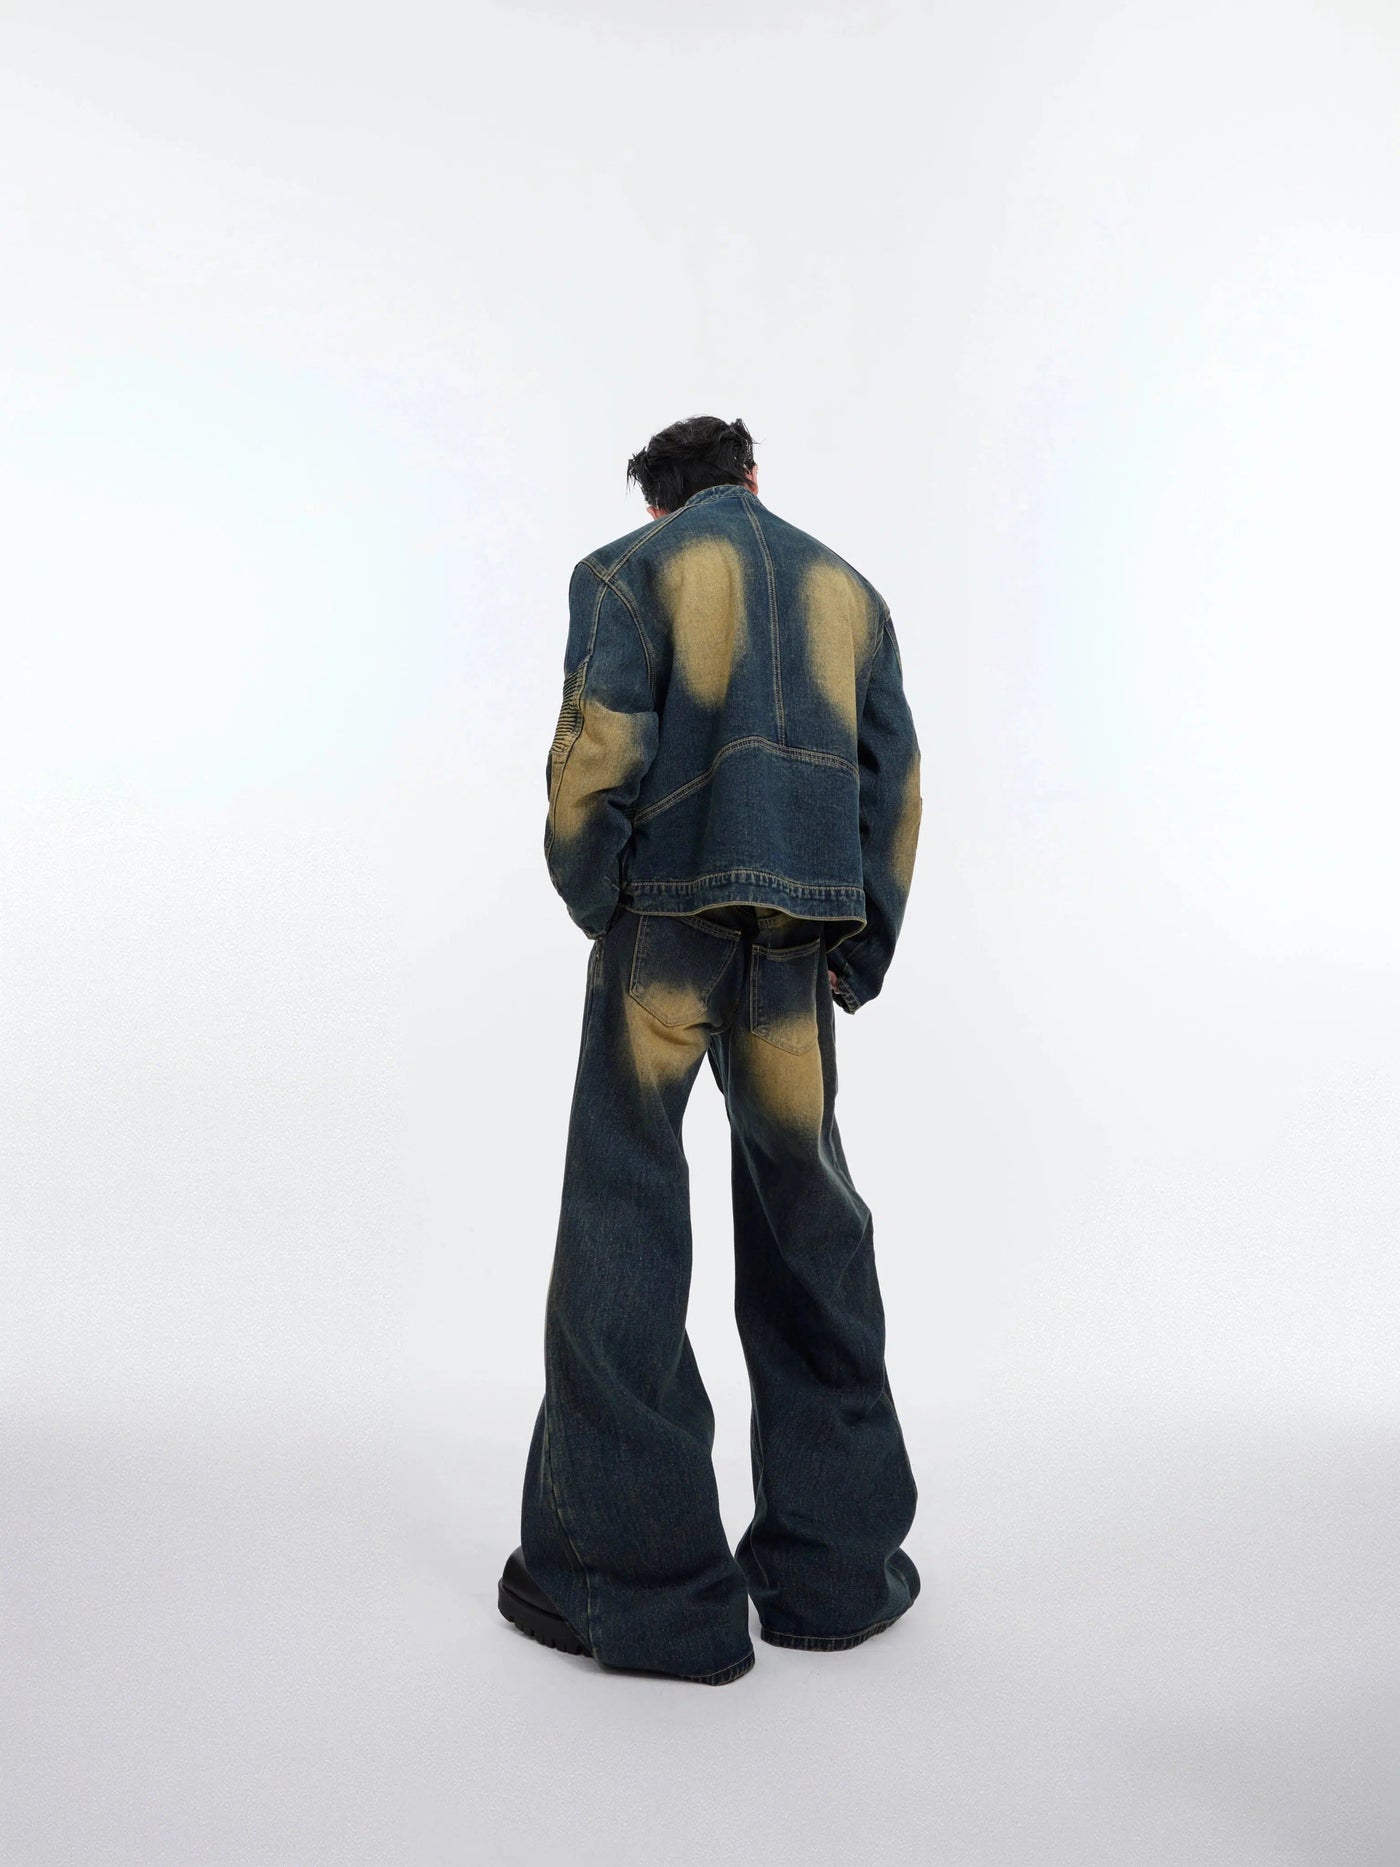 Fade Zipped Denim Jacket & Jeans Set Korean Street Fashion Clothing Set By Argue Culture Shop Online at OH Vault